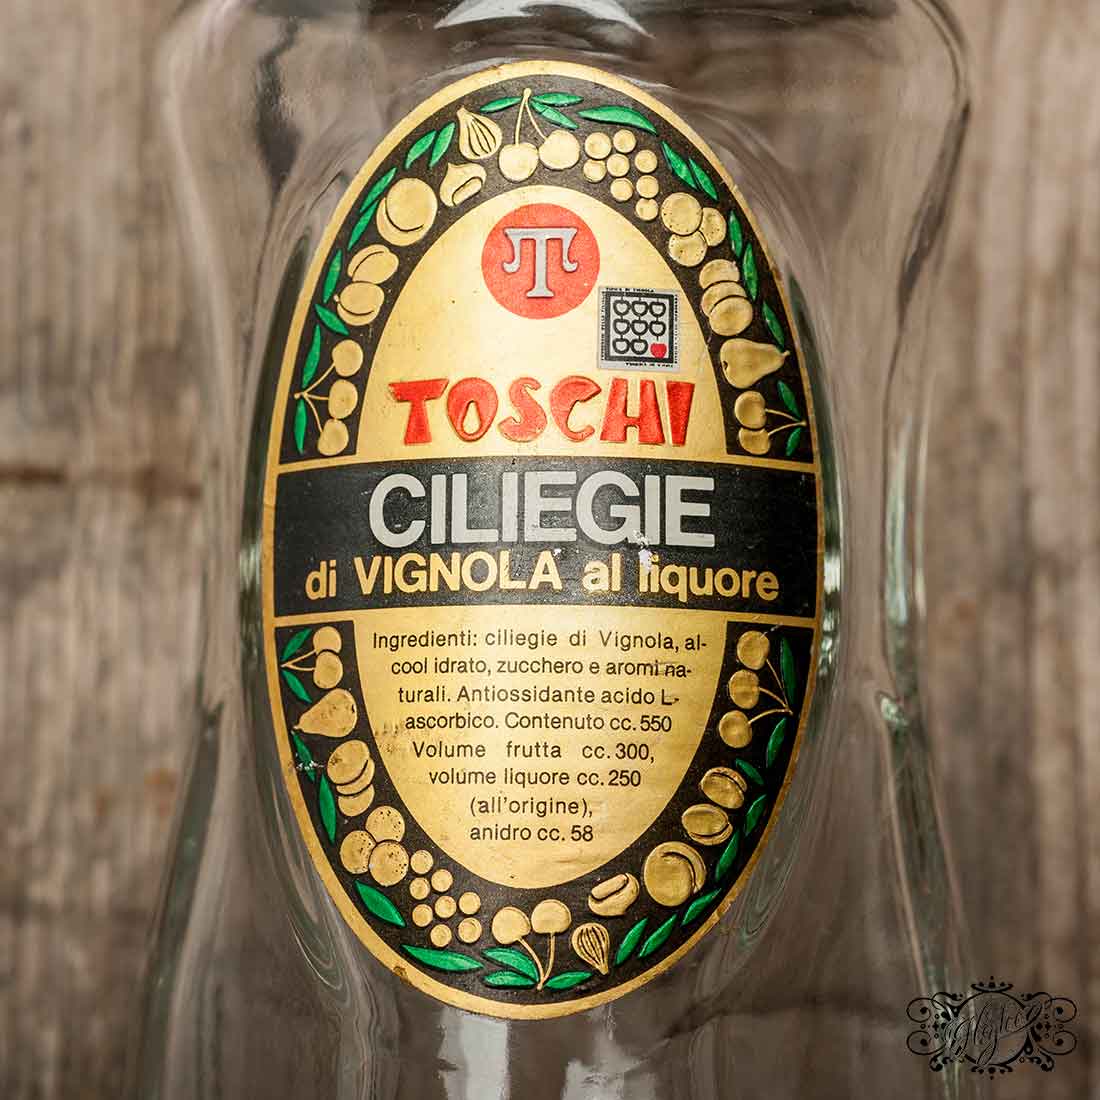 Toschi glass jar